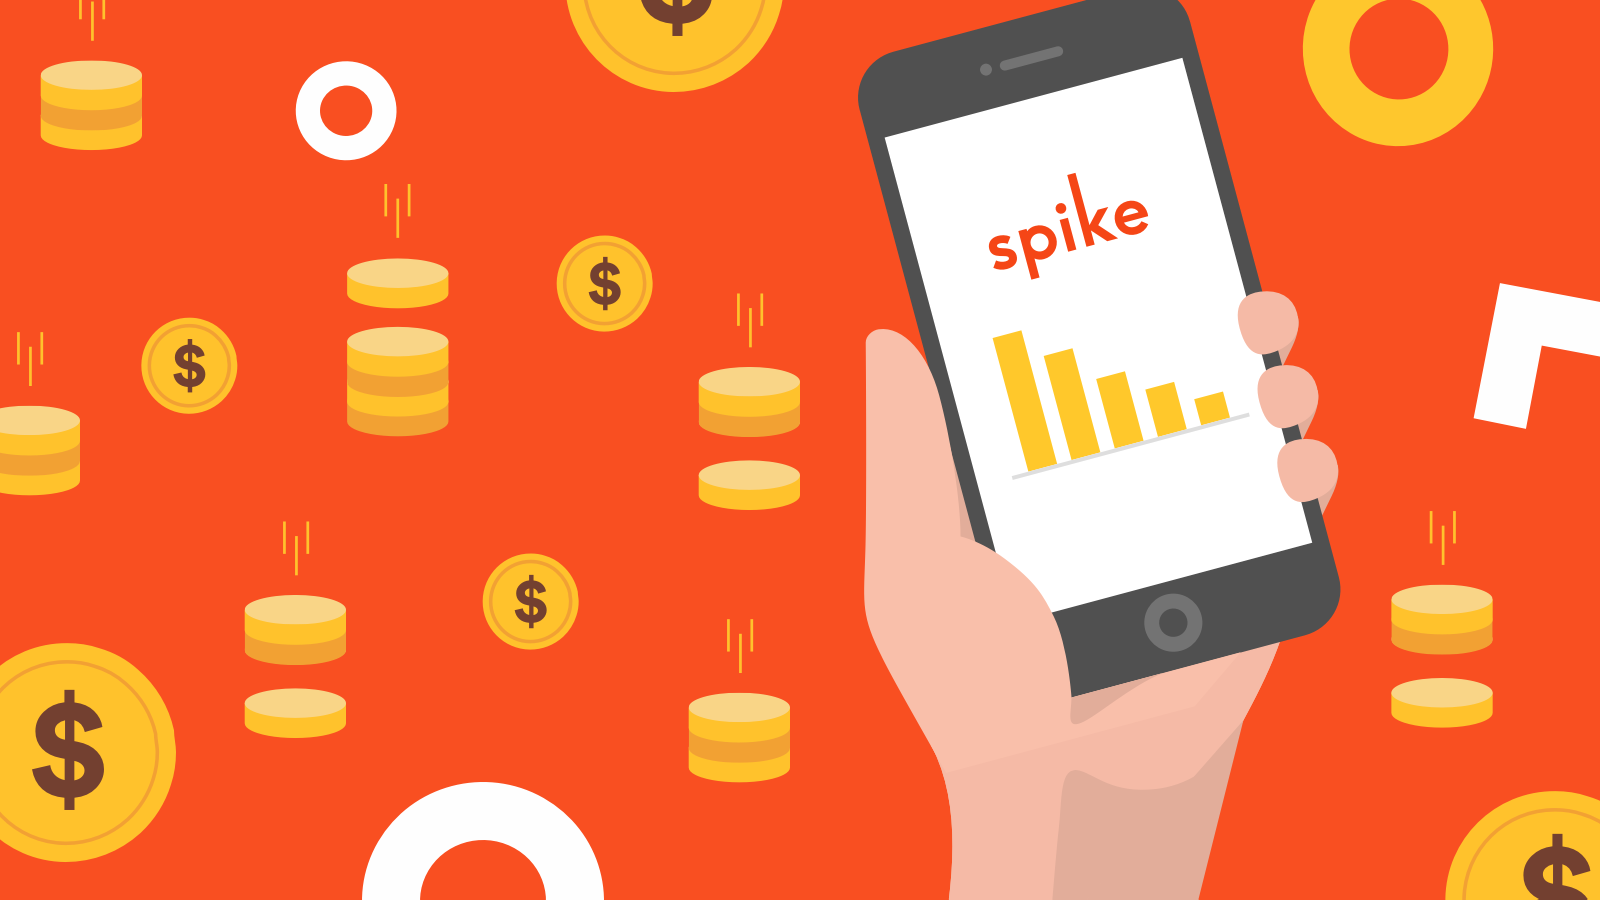 Spike points hit $1 million milestone - The Origin Blog